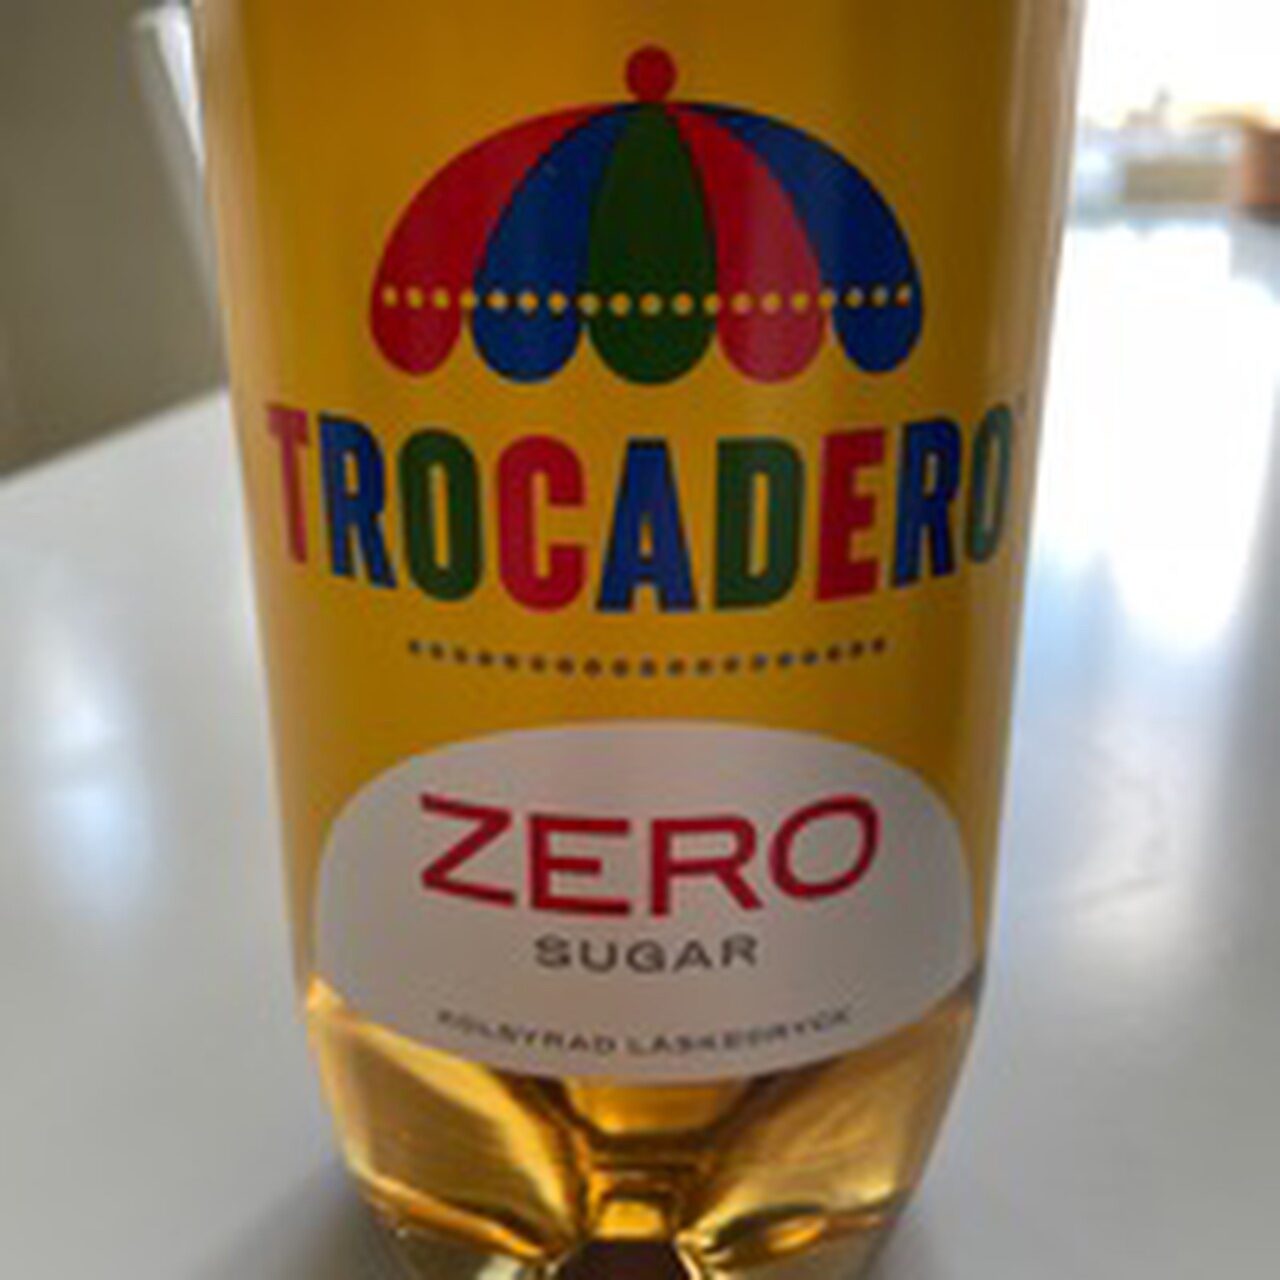 Trocadero Zero Sugar - Produkt